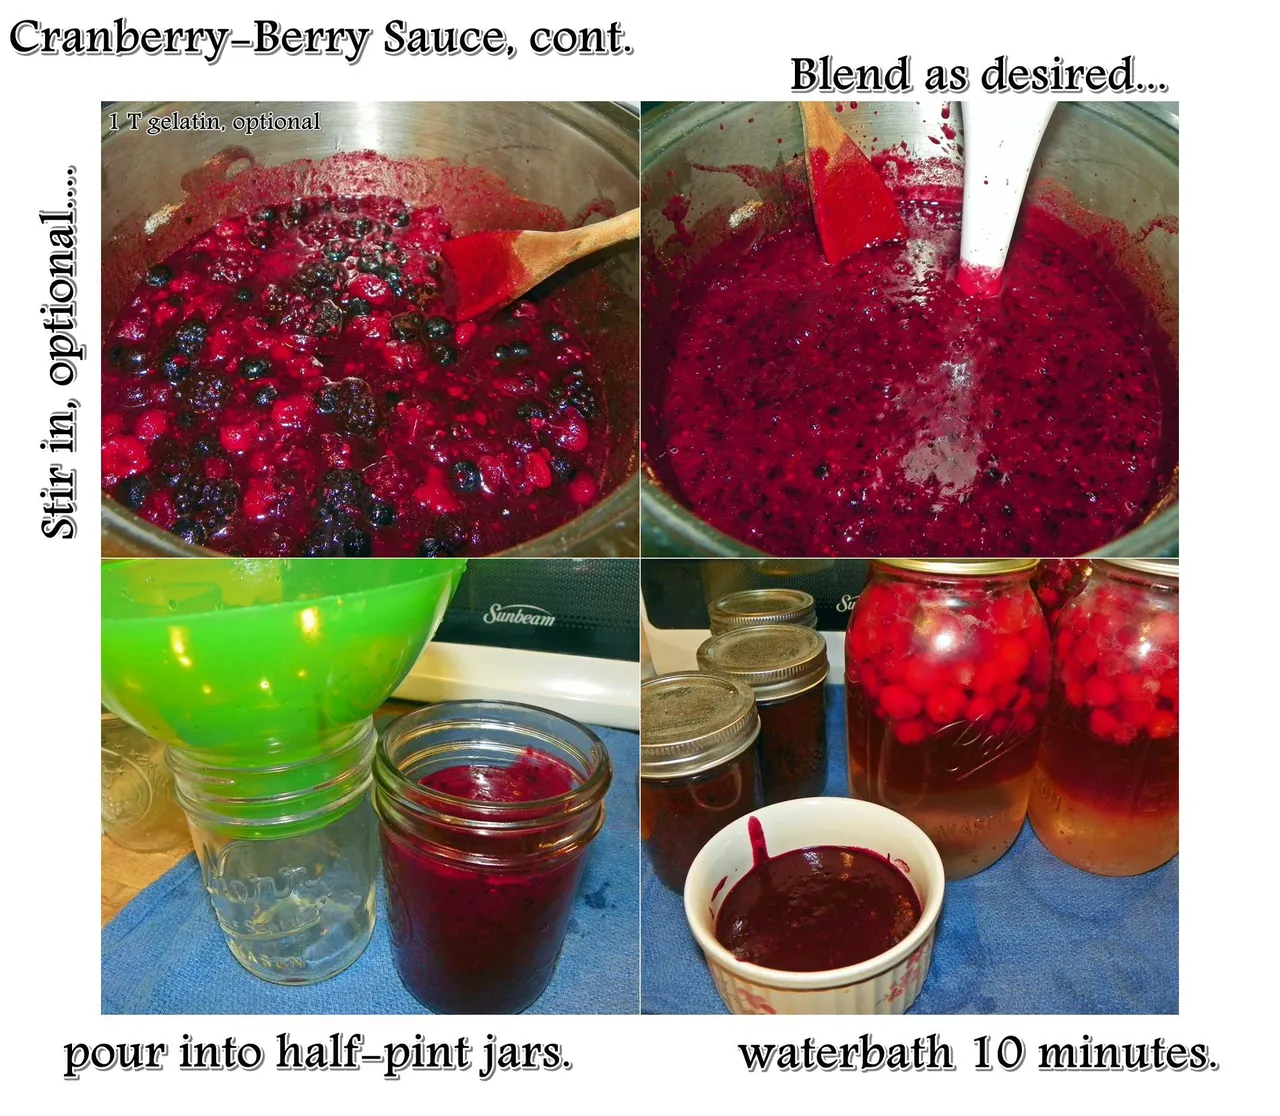 cranberrysauce02.jpg